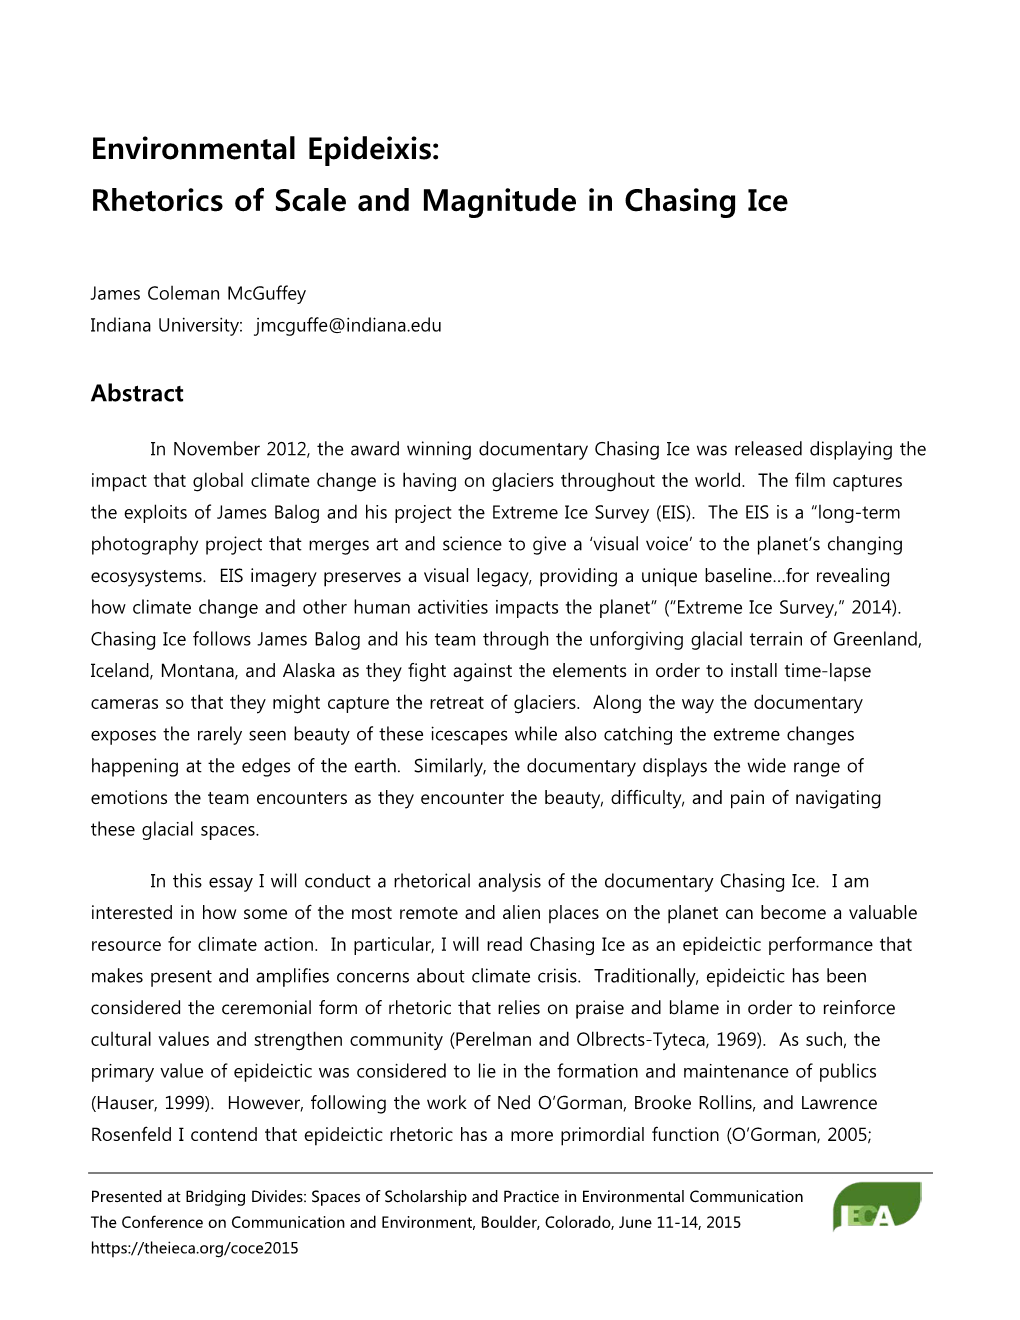 Environmental Epideixis: Rhetorics of Scale and Magnitude in Chasing Ice